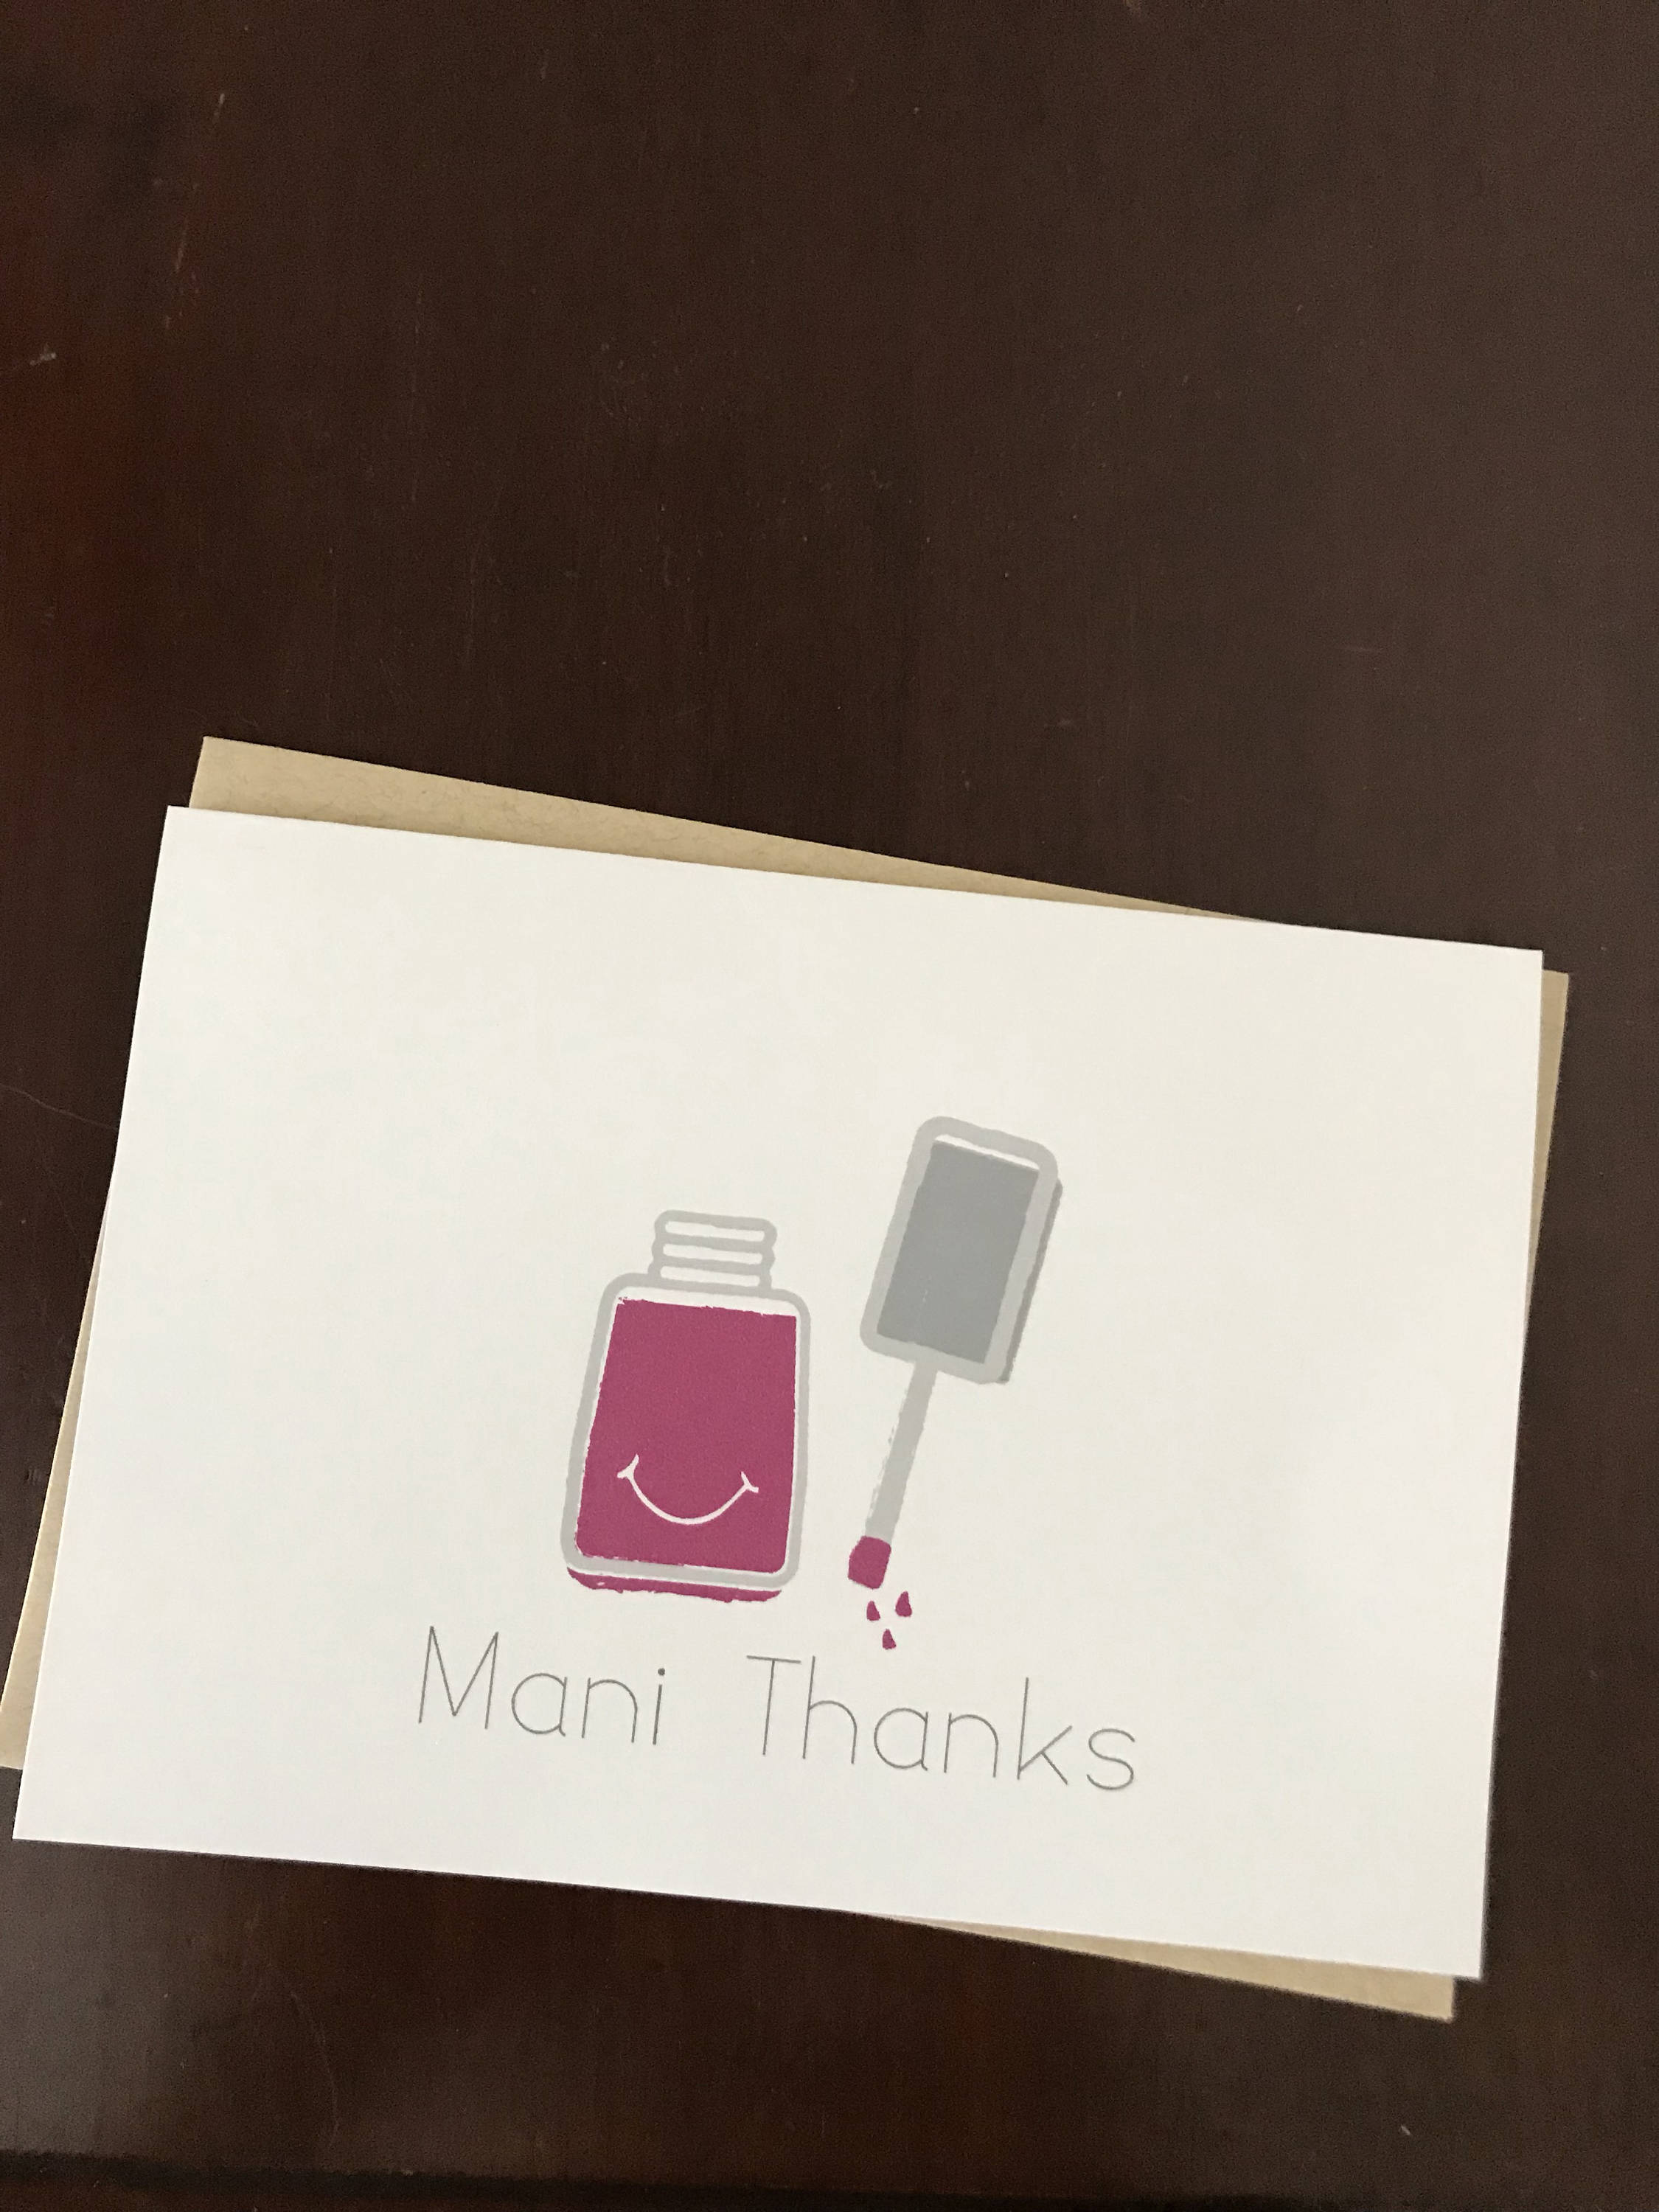 Mani thanks thank you card